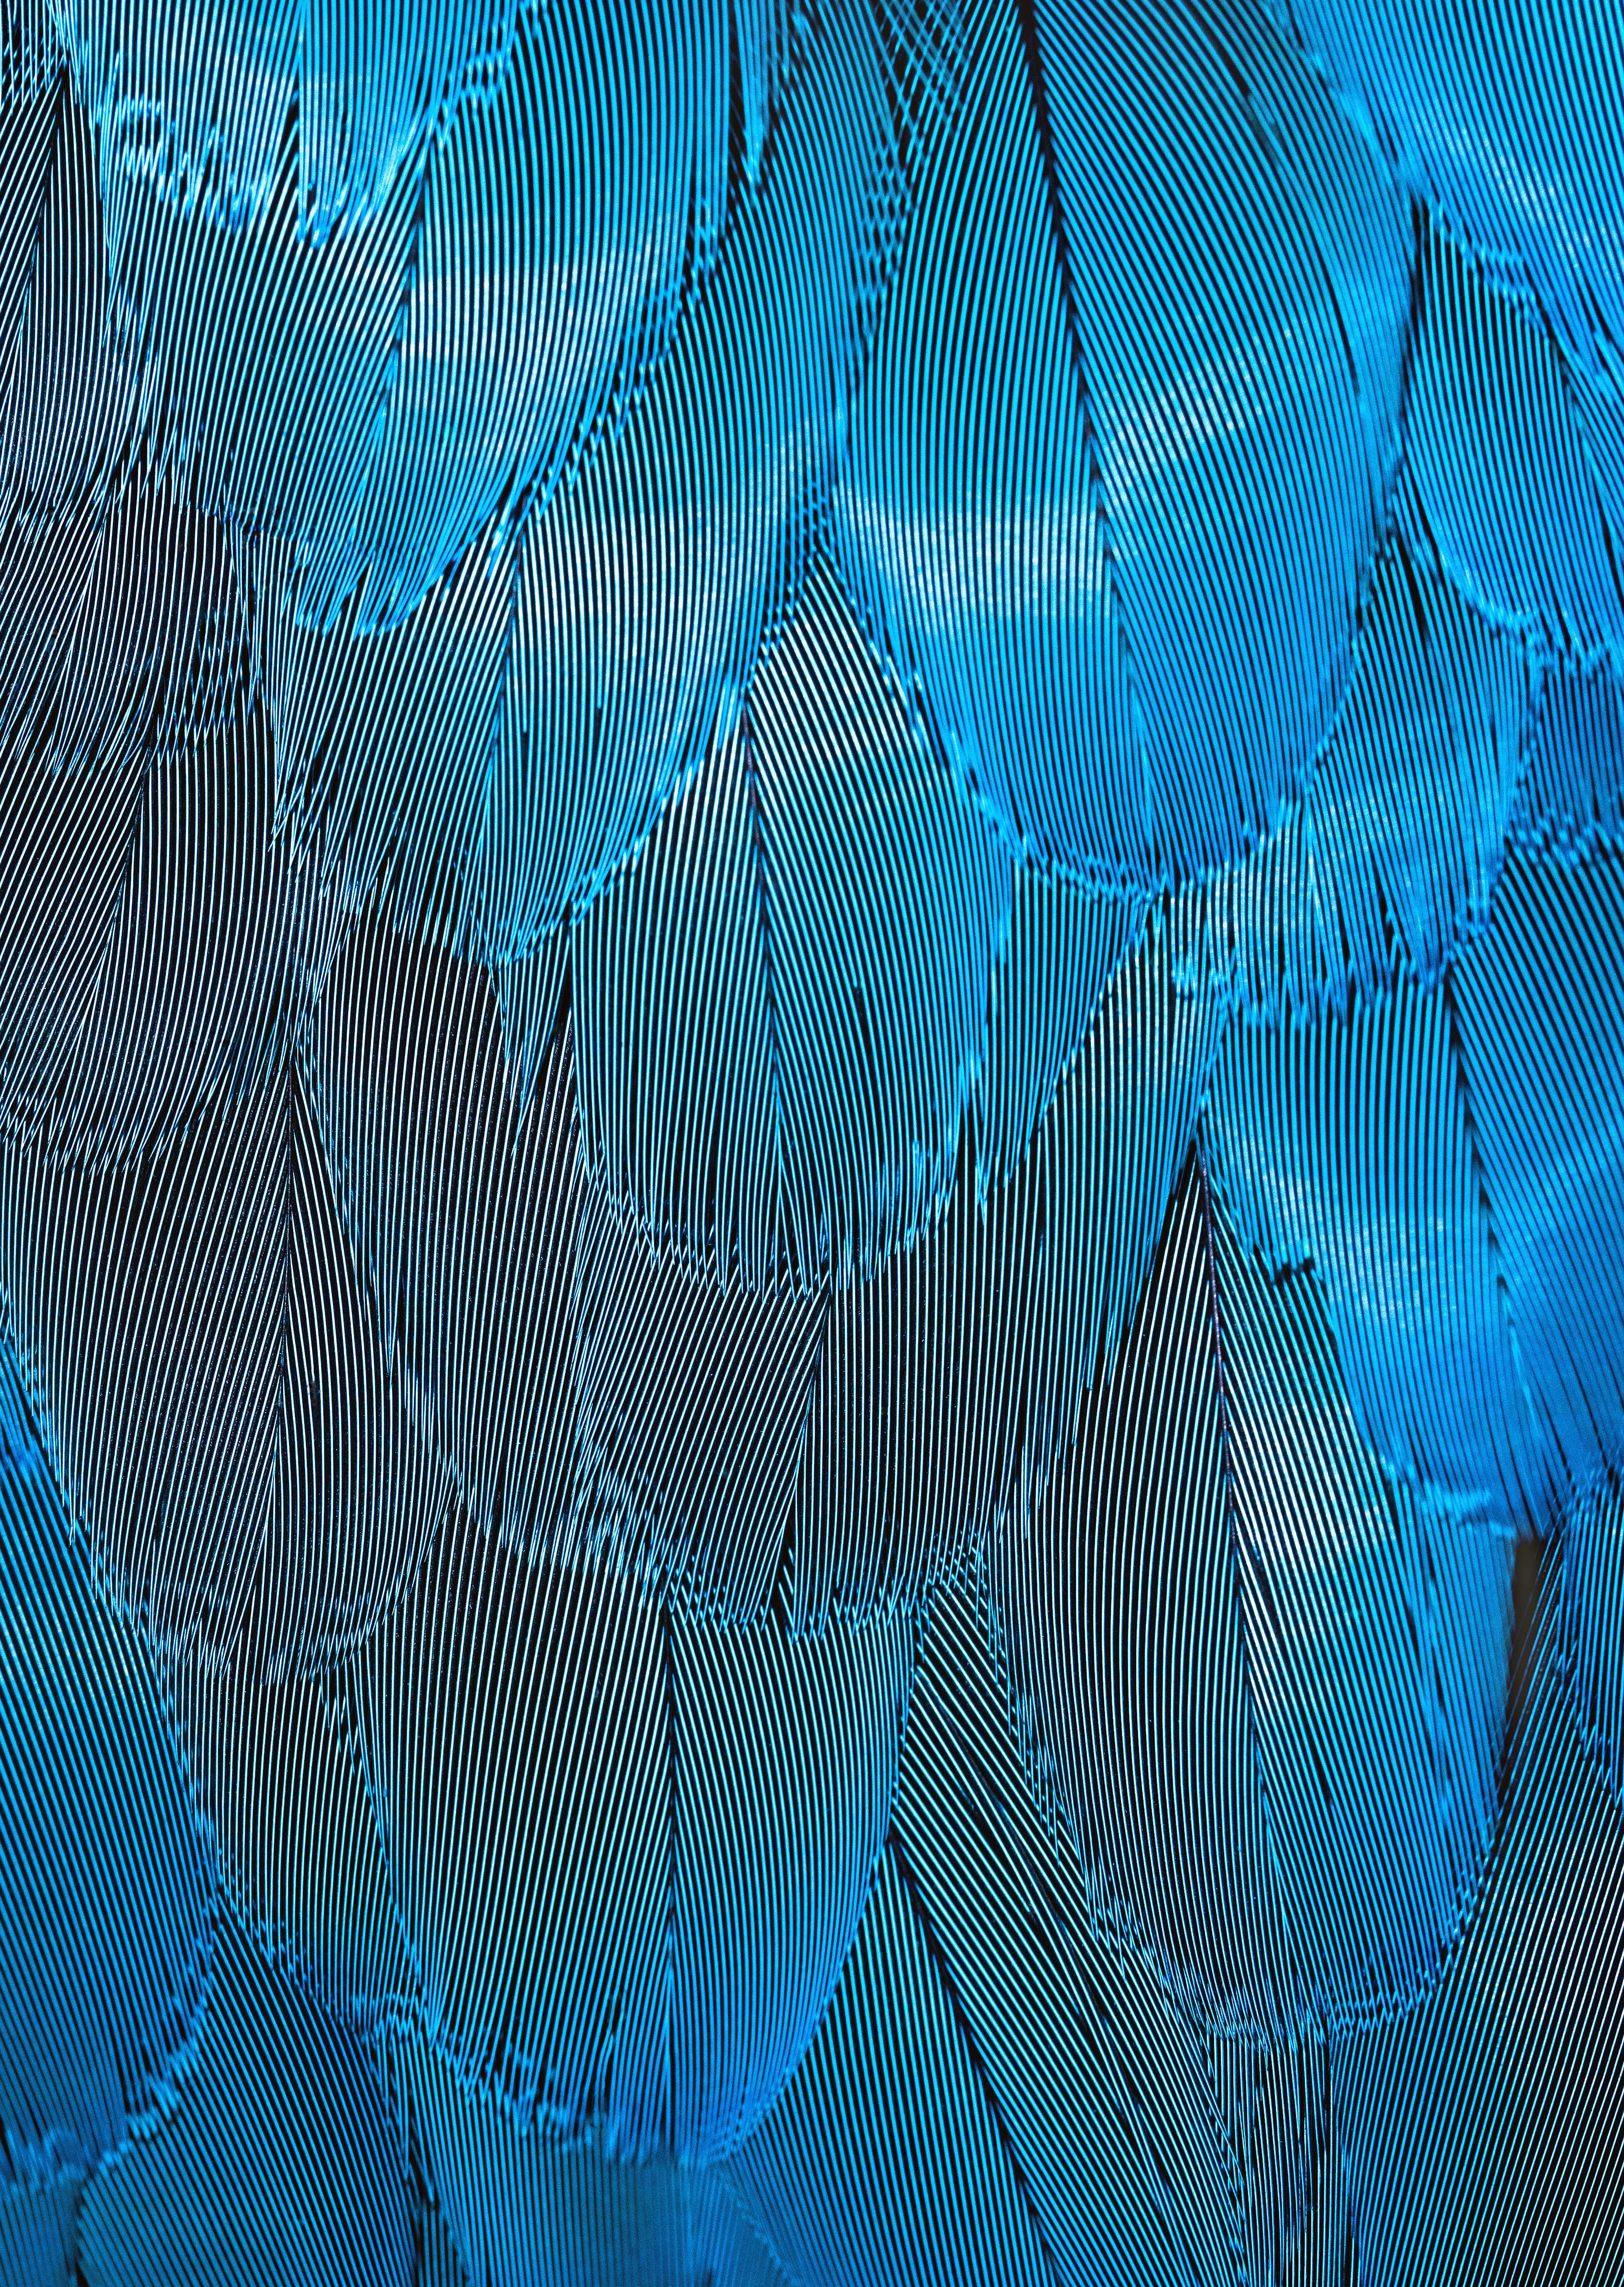 macro, feather, textures, blue, texture, iridescent 5K